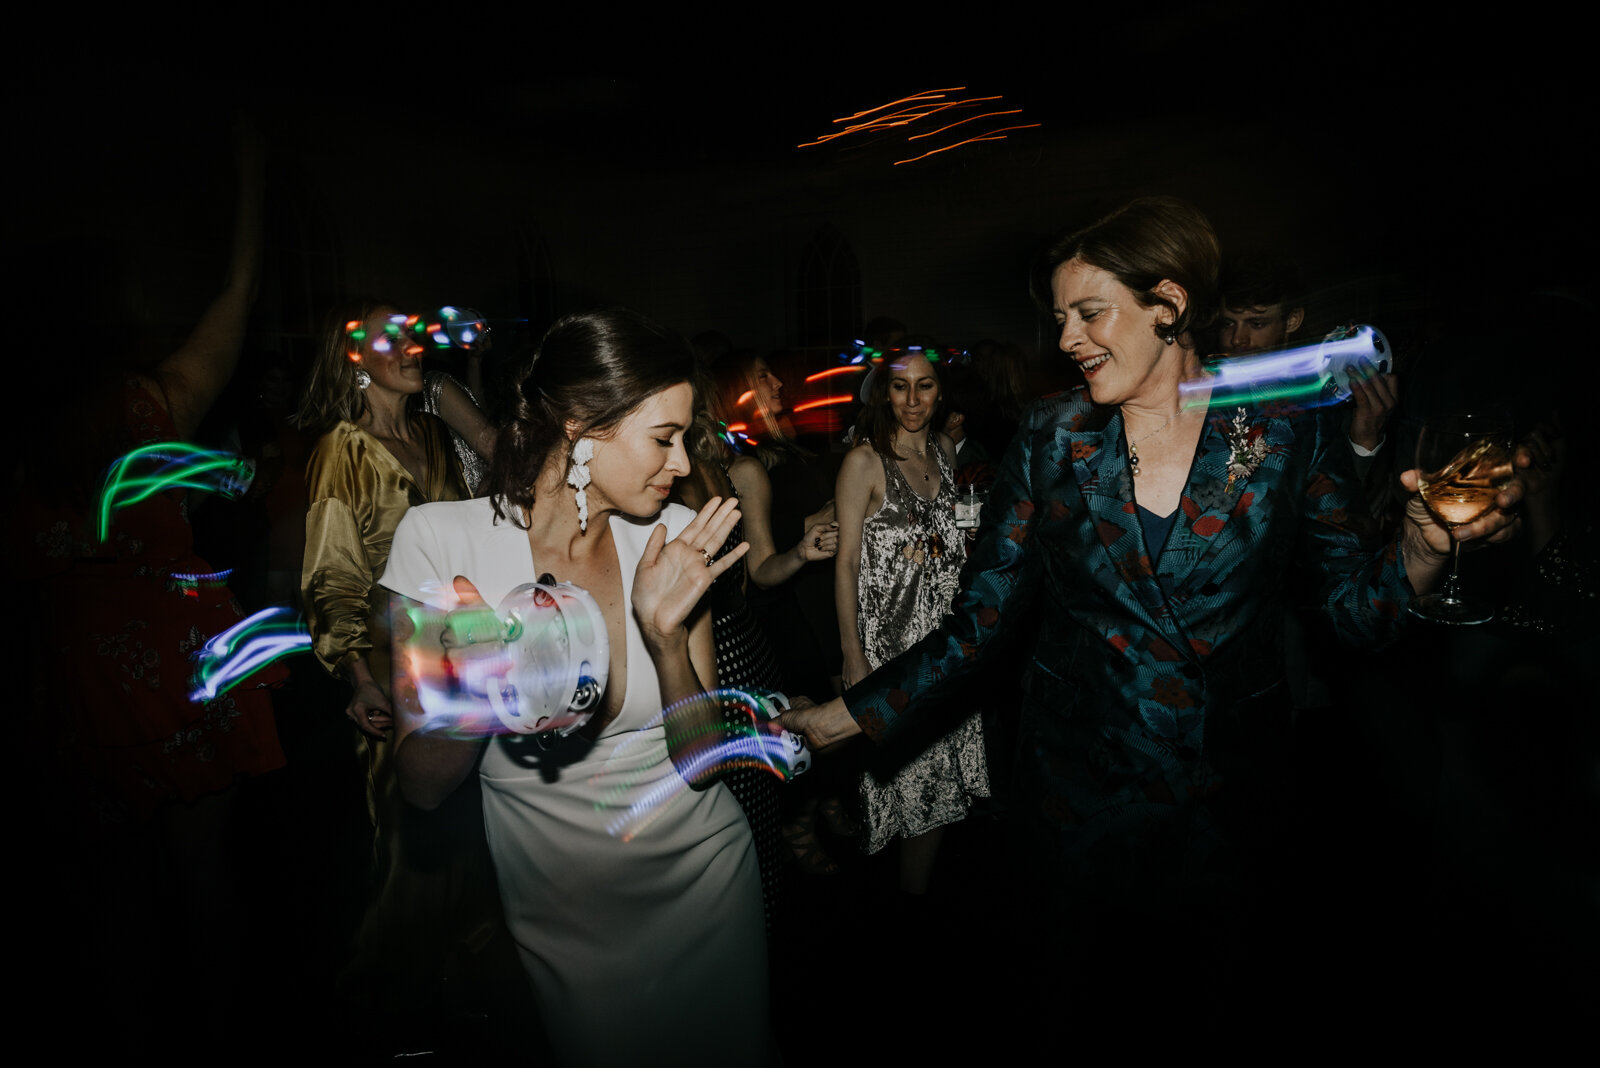 Austin, Texas Unique Wedding Reception Dancing Photos